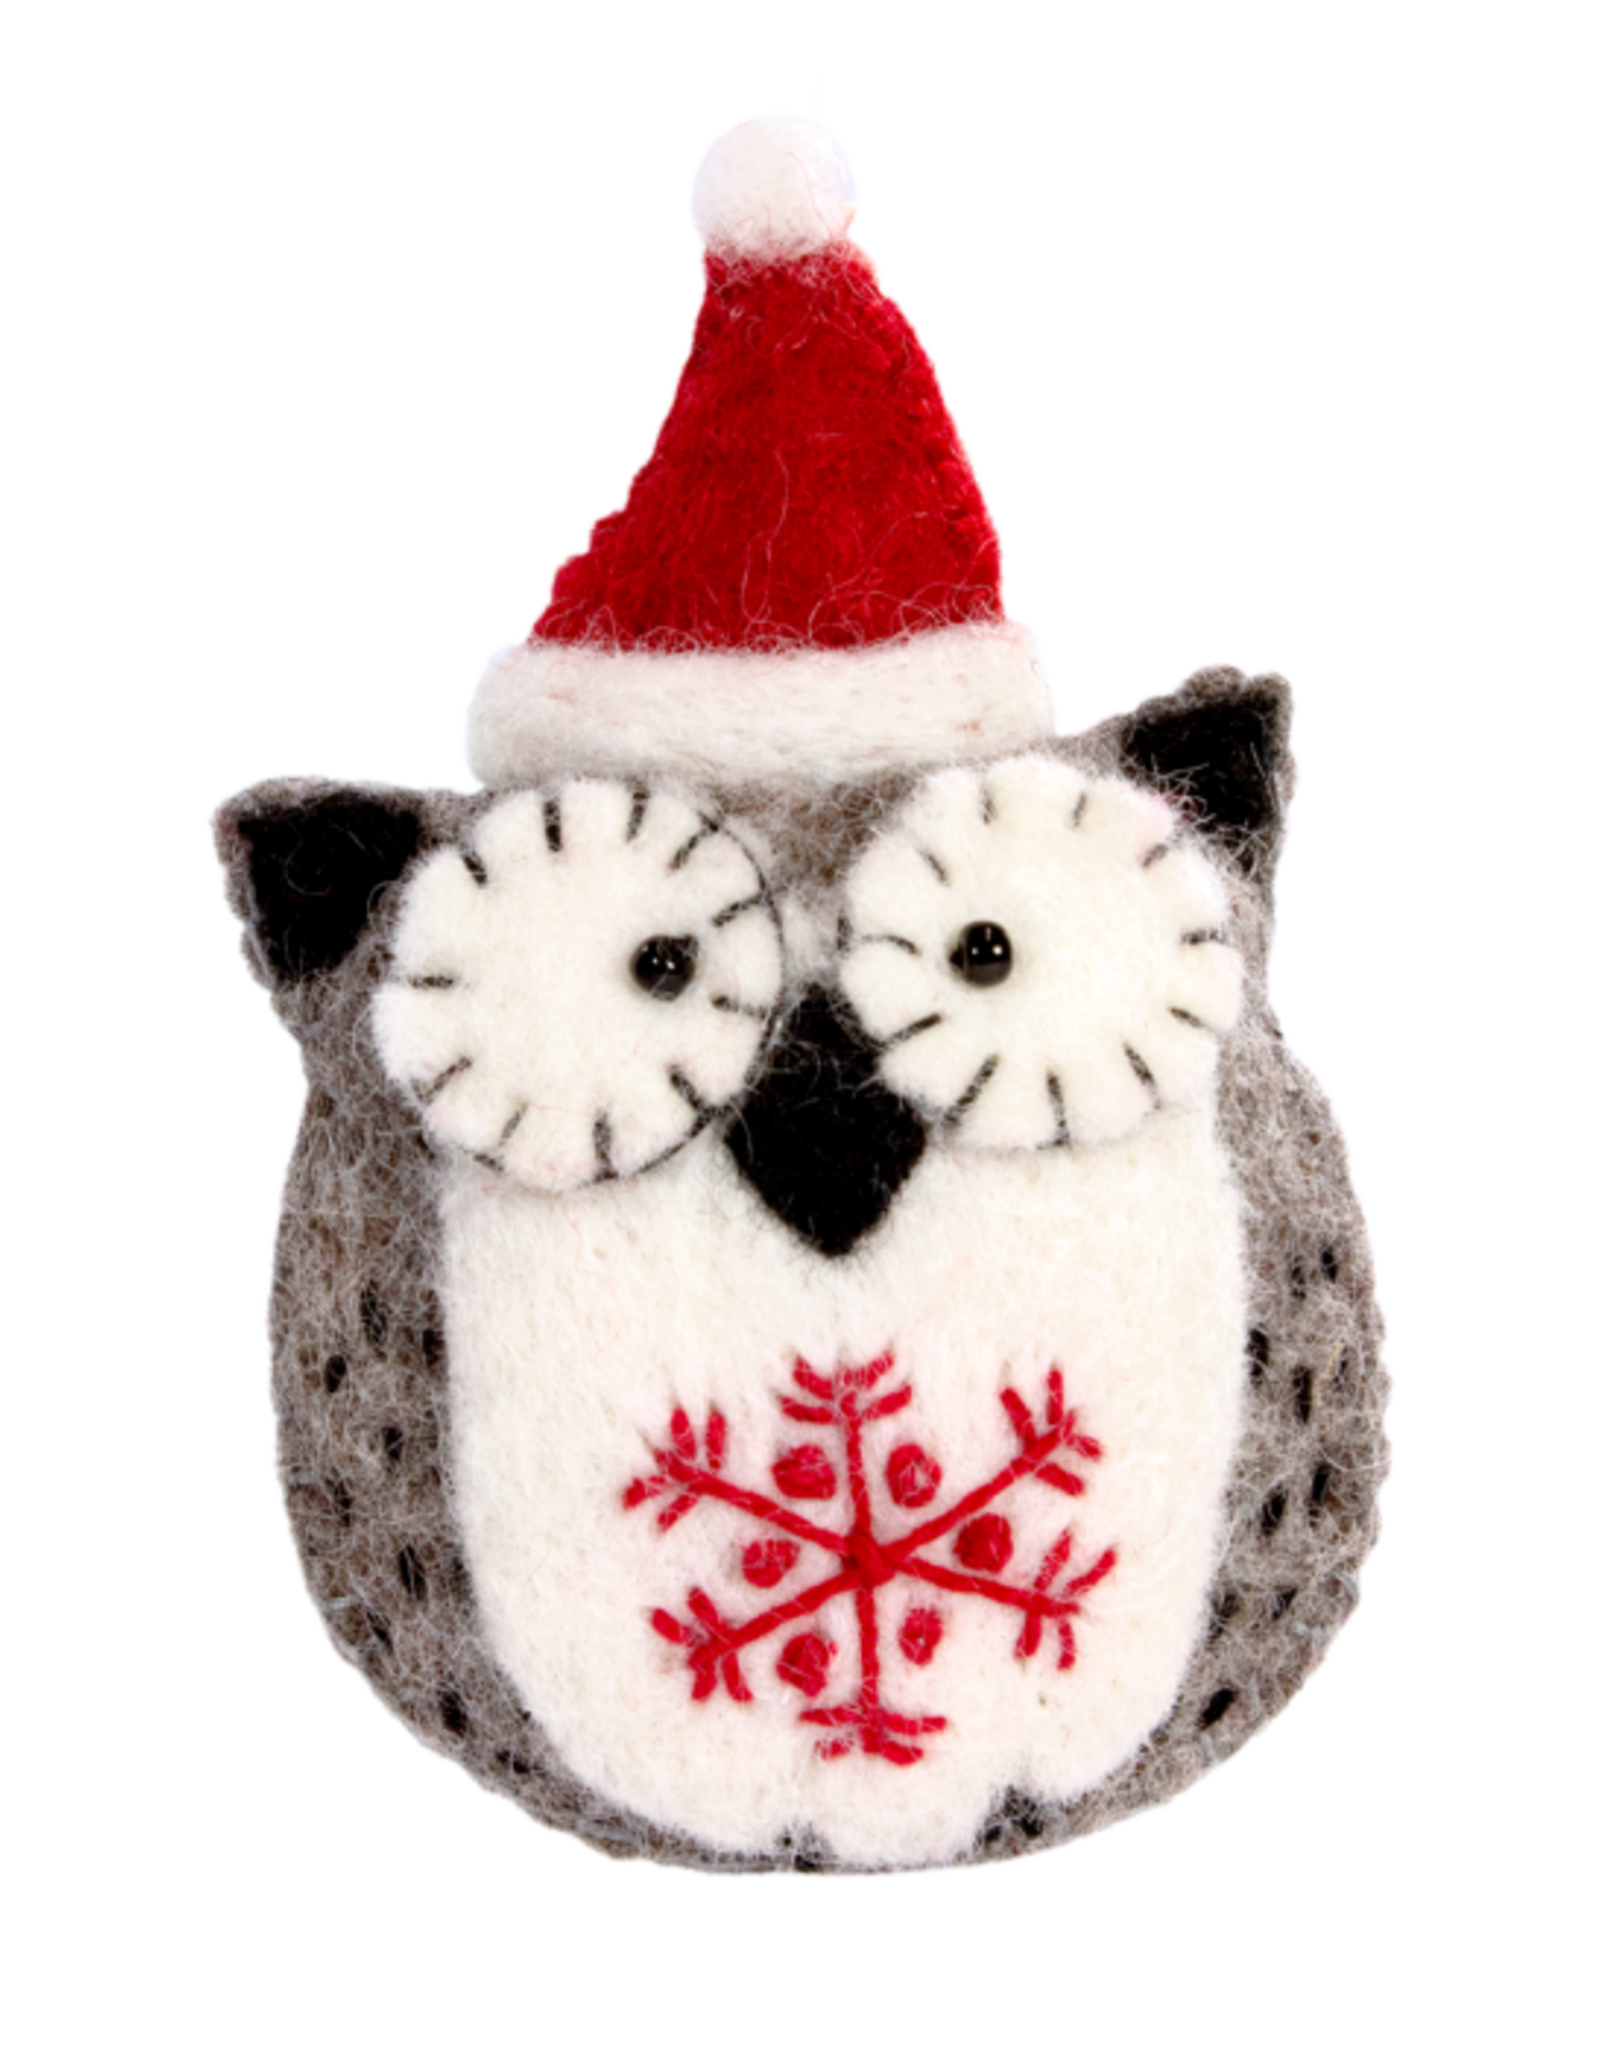 dZi Handmade Snowflake Holiday Owl Ornament